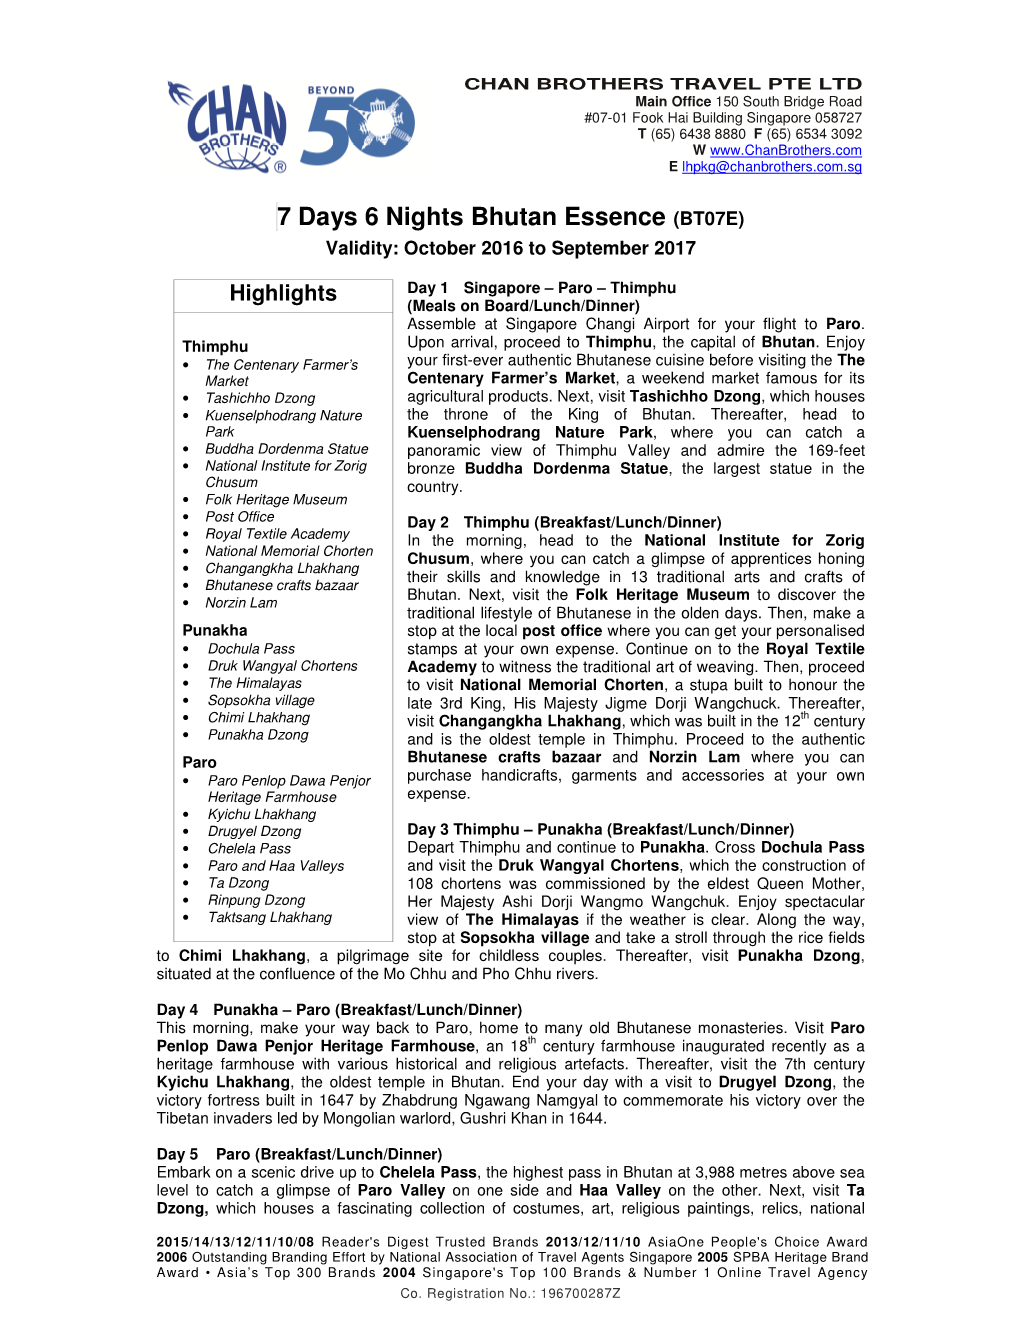 7 Days 6 Nights Bhutan Essence (BT07E) Validity: October 2016 to September 2017